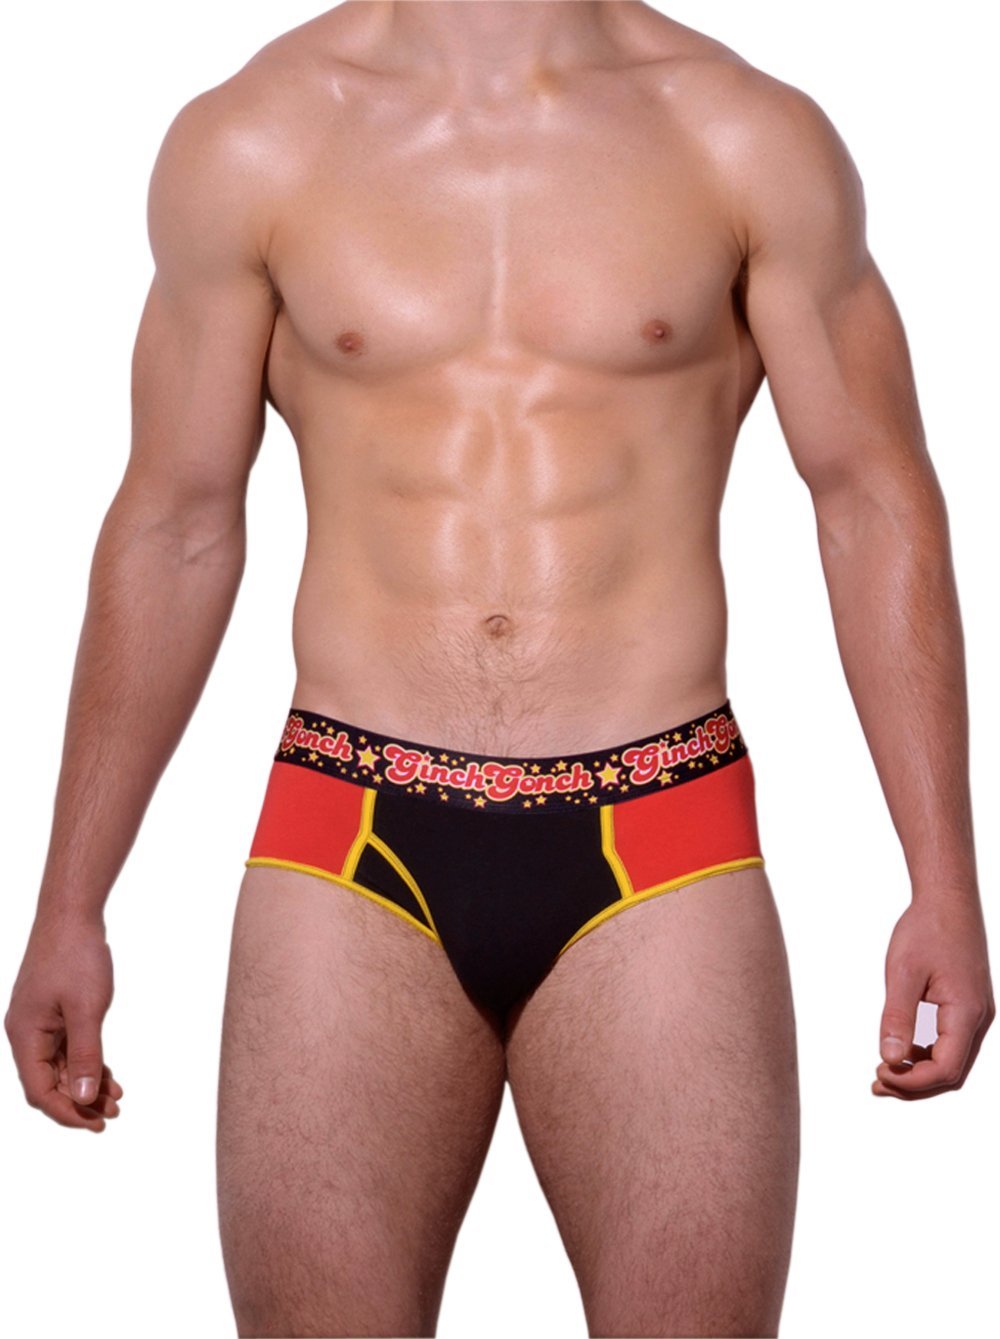 Atomic Fireballs Brief Men's Underwear Red and Black panels yellow trim printed waistband front